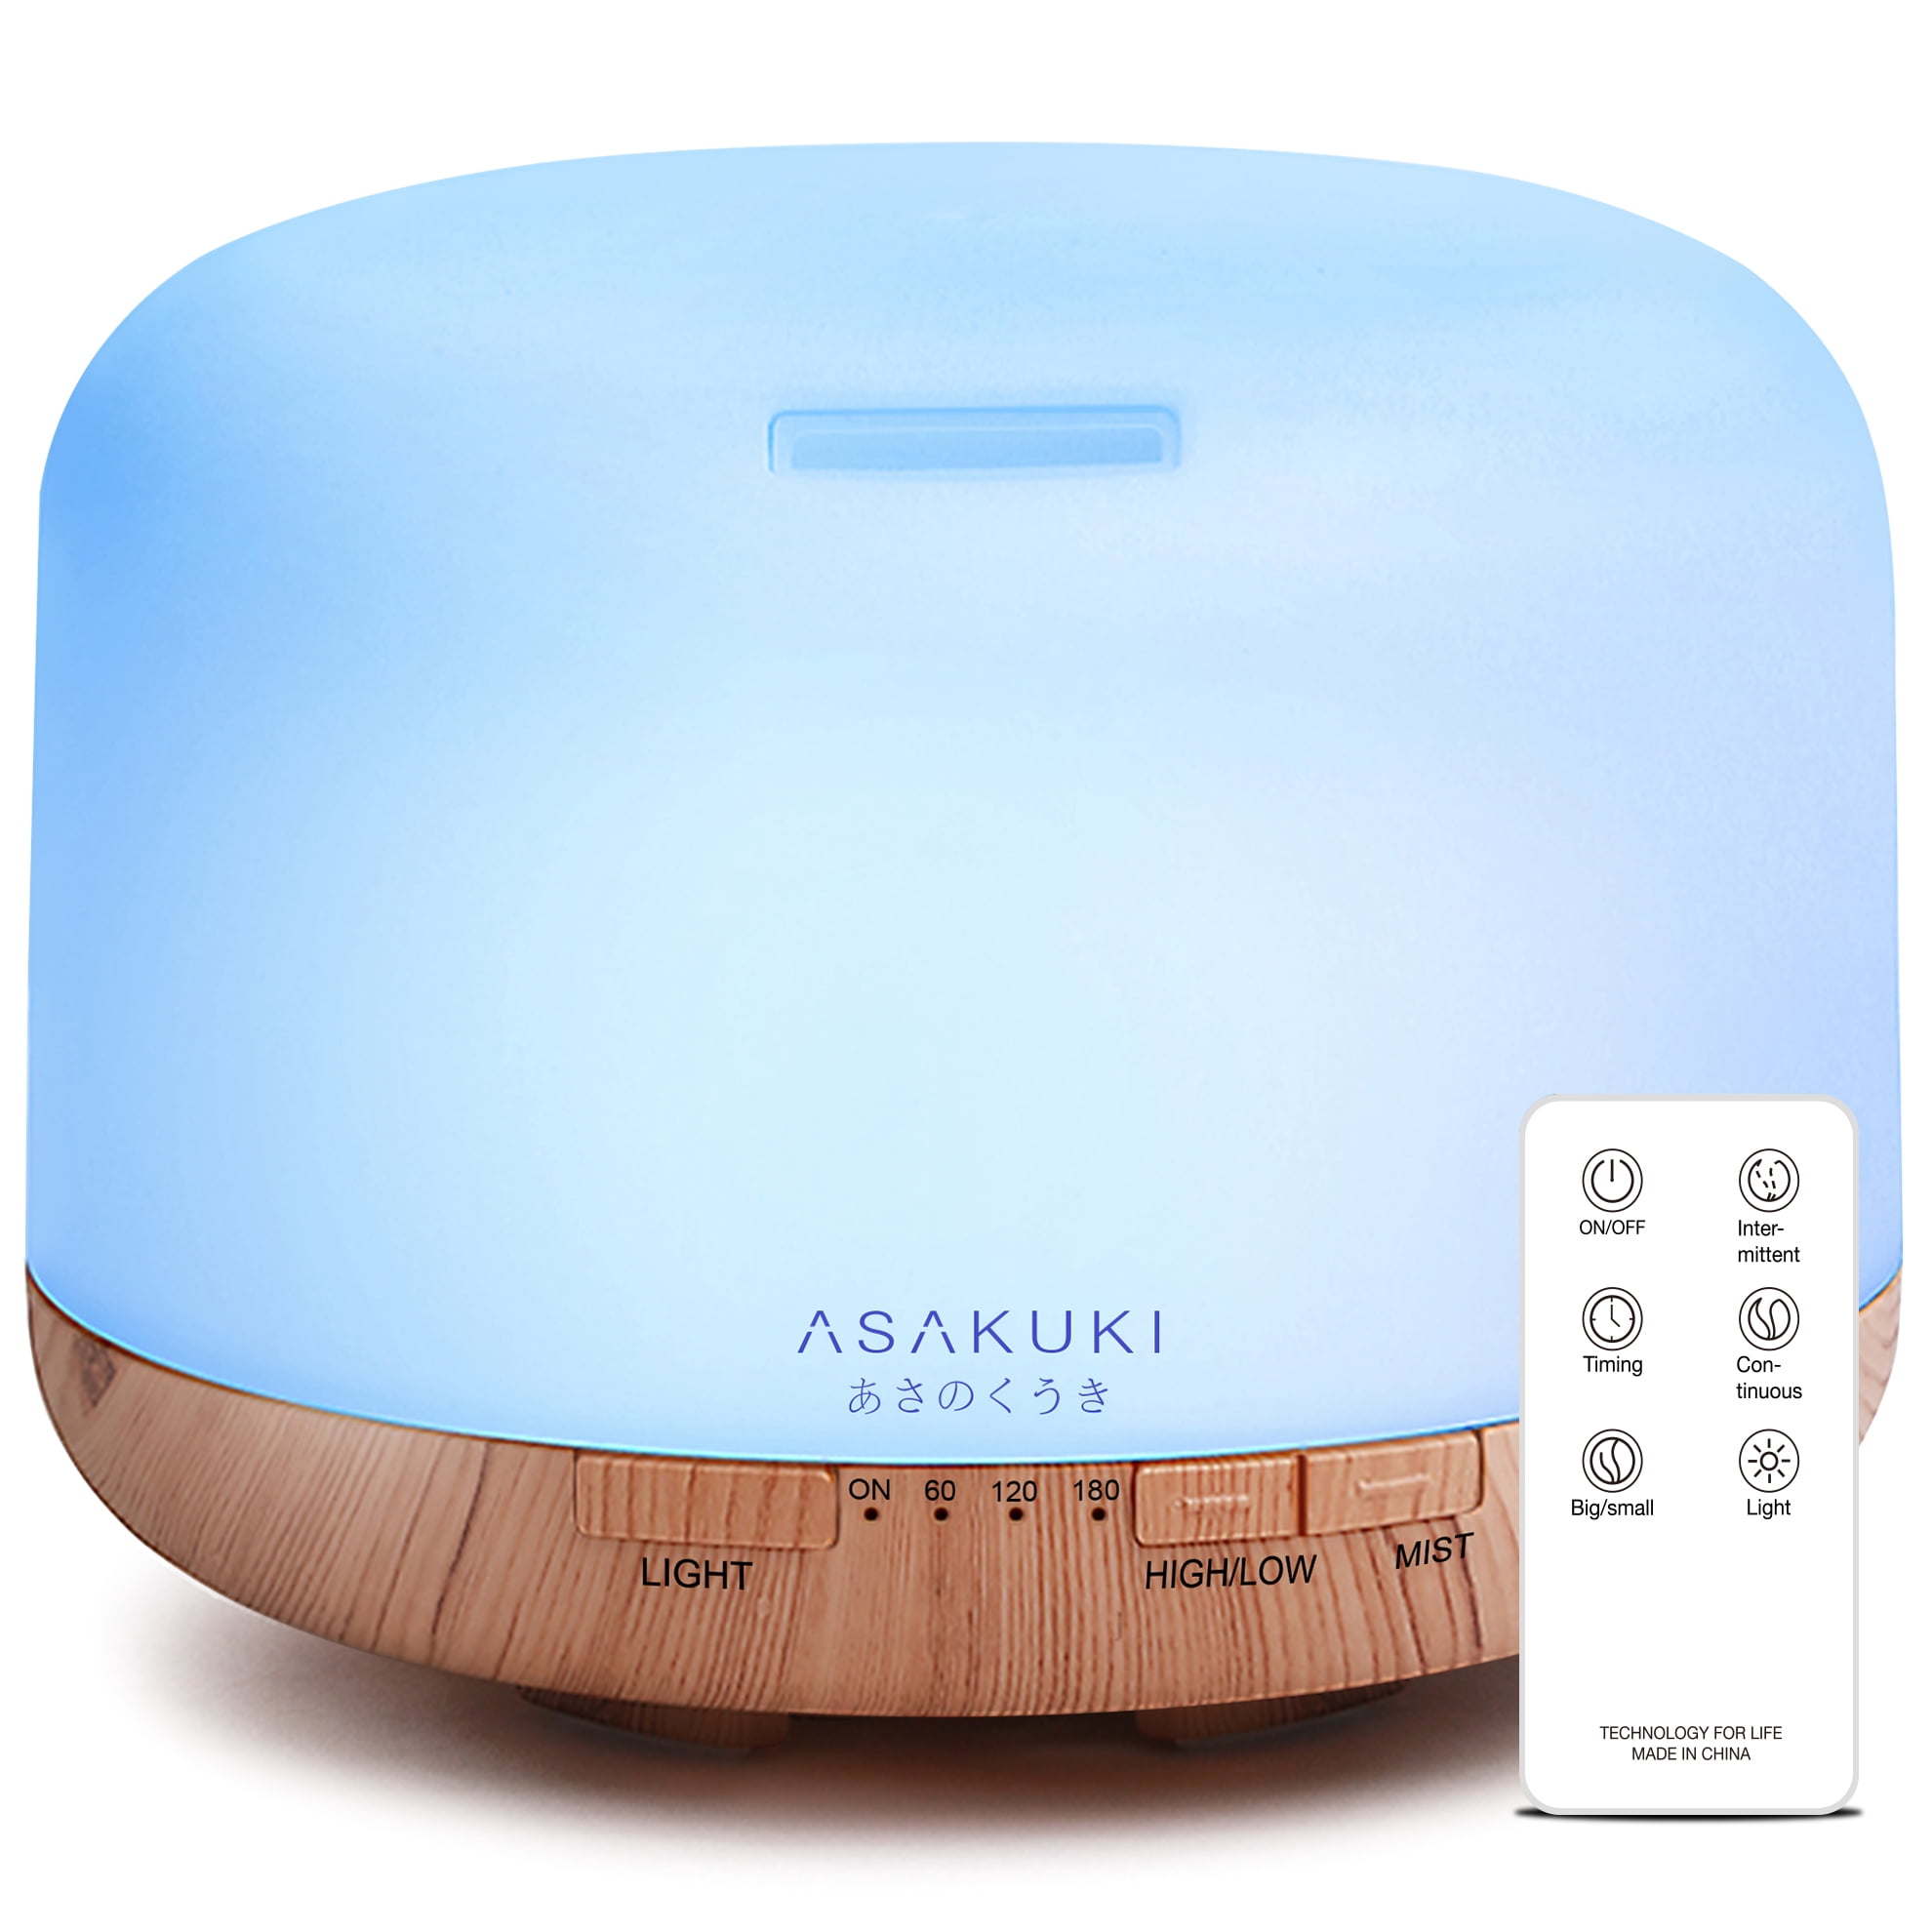 Fragran Quiet 5-in-1 Humidifier ASAKUKI 400ML Premium Essential Oil Diffuser 